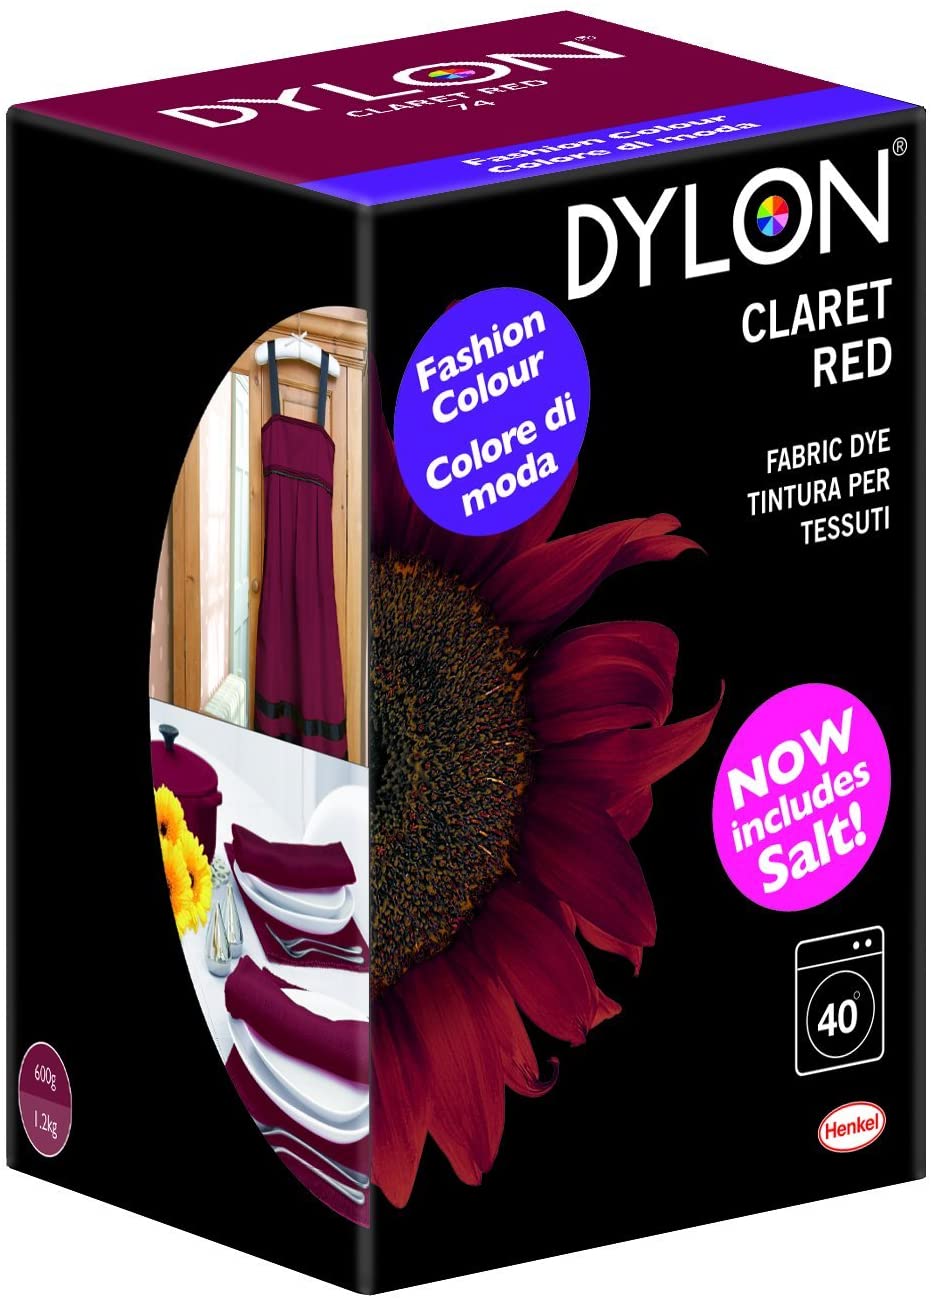 Dylon Fabric & Clothes Dye Dylon Machine / Hand dye /Soft Furnishing